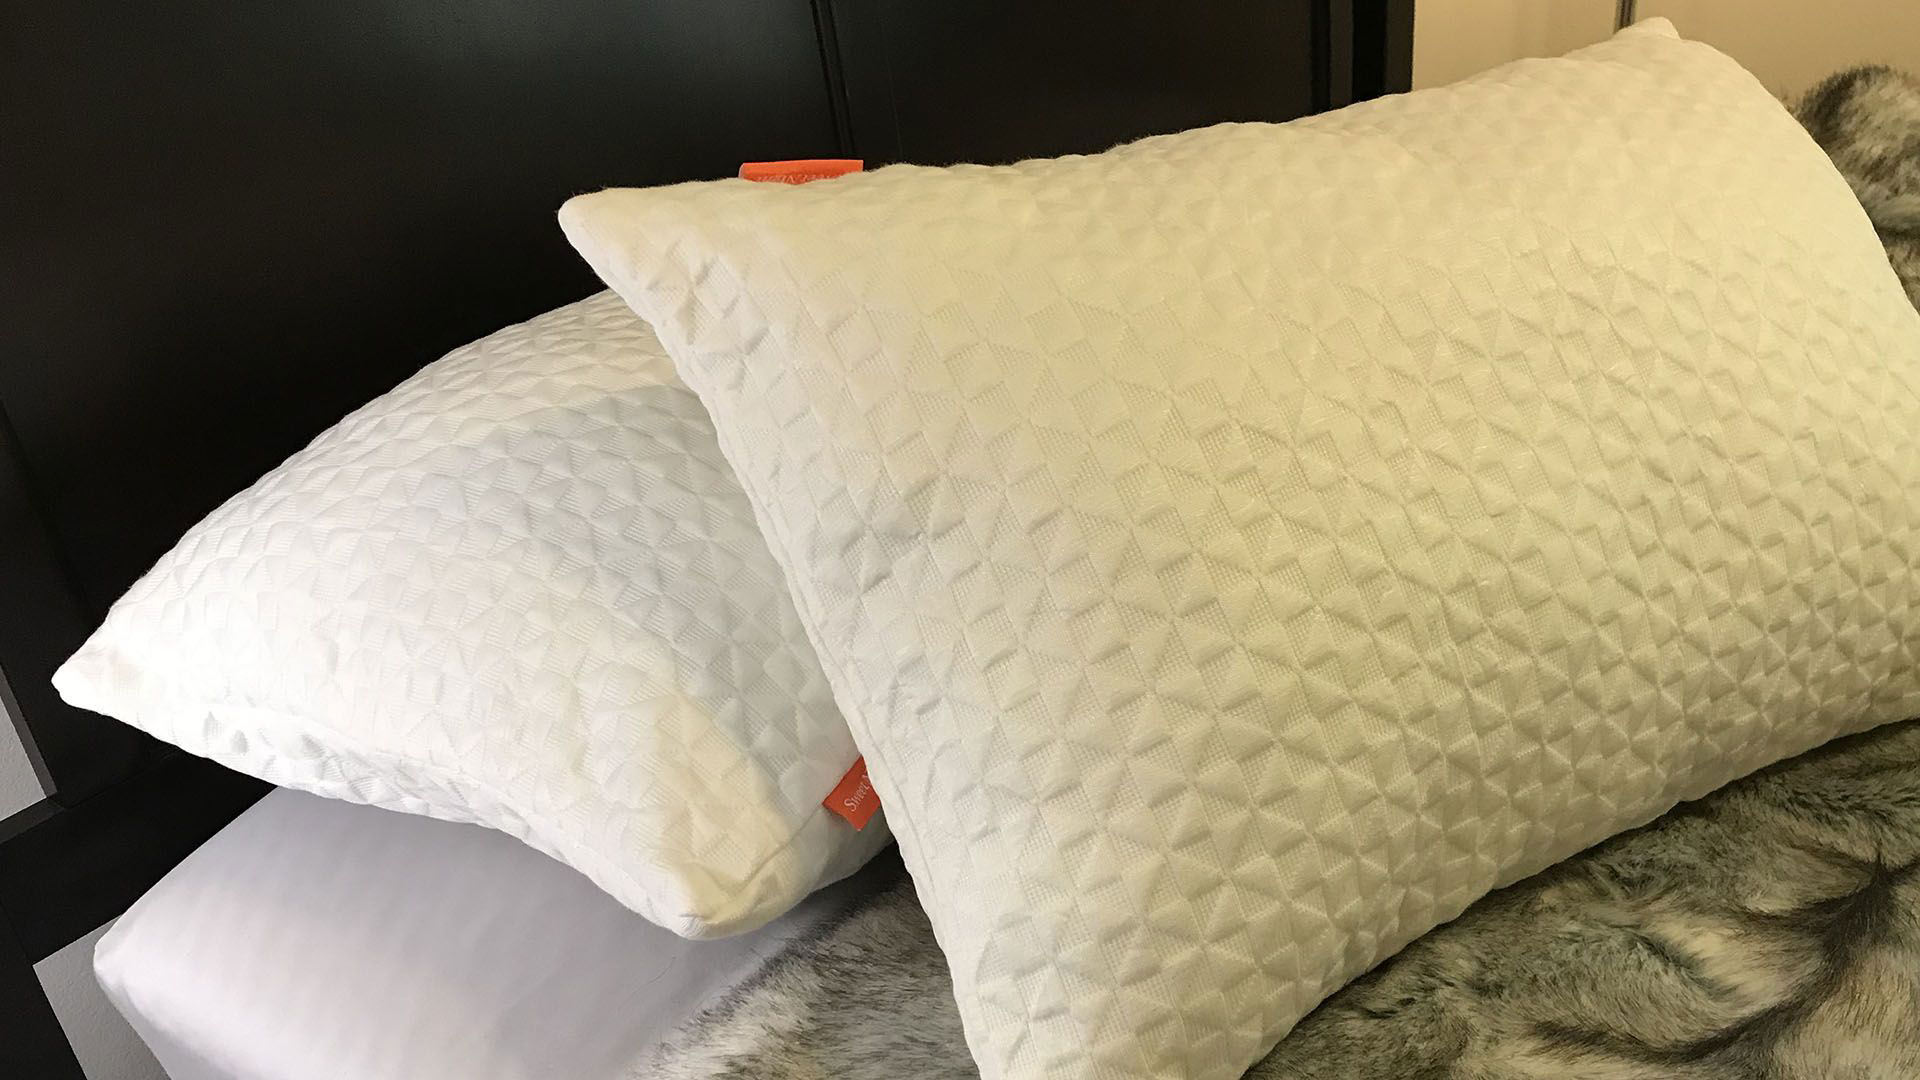 SweetNight Original Cooling Gel Foam Pillow review: an outstandingly ...